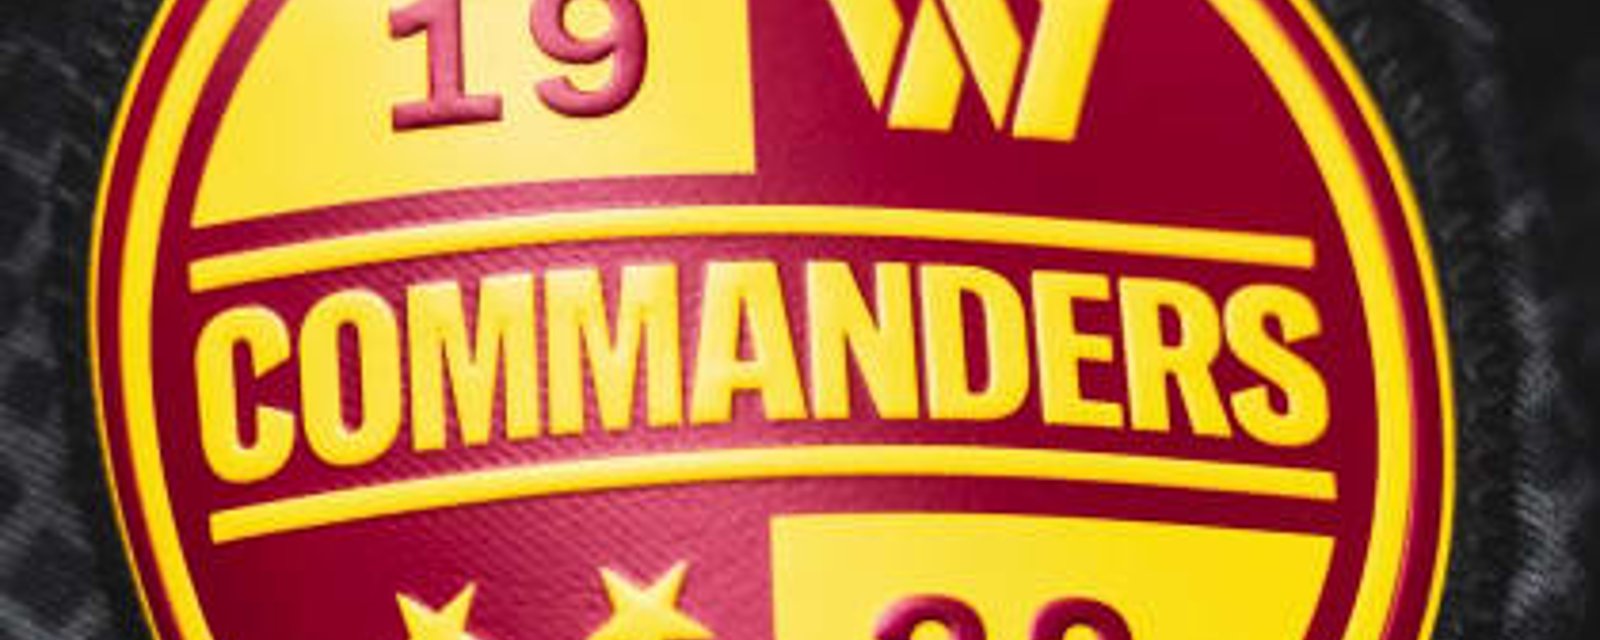 Washington Commanders could bring back old name!